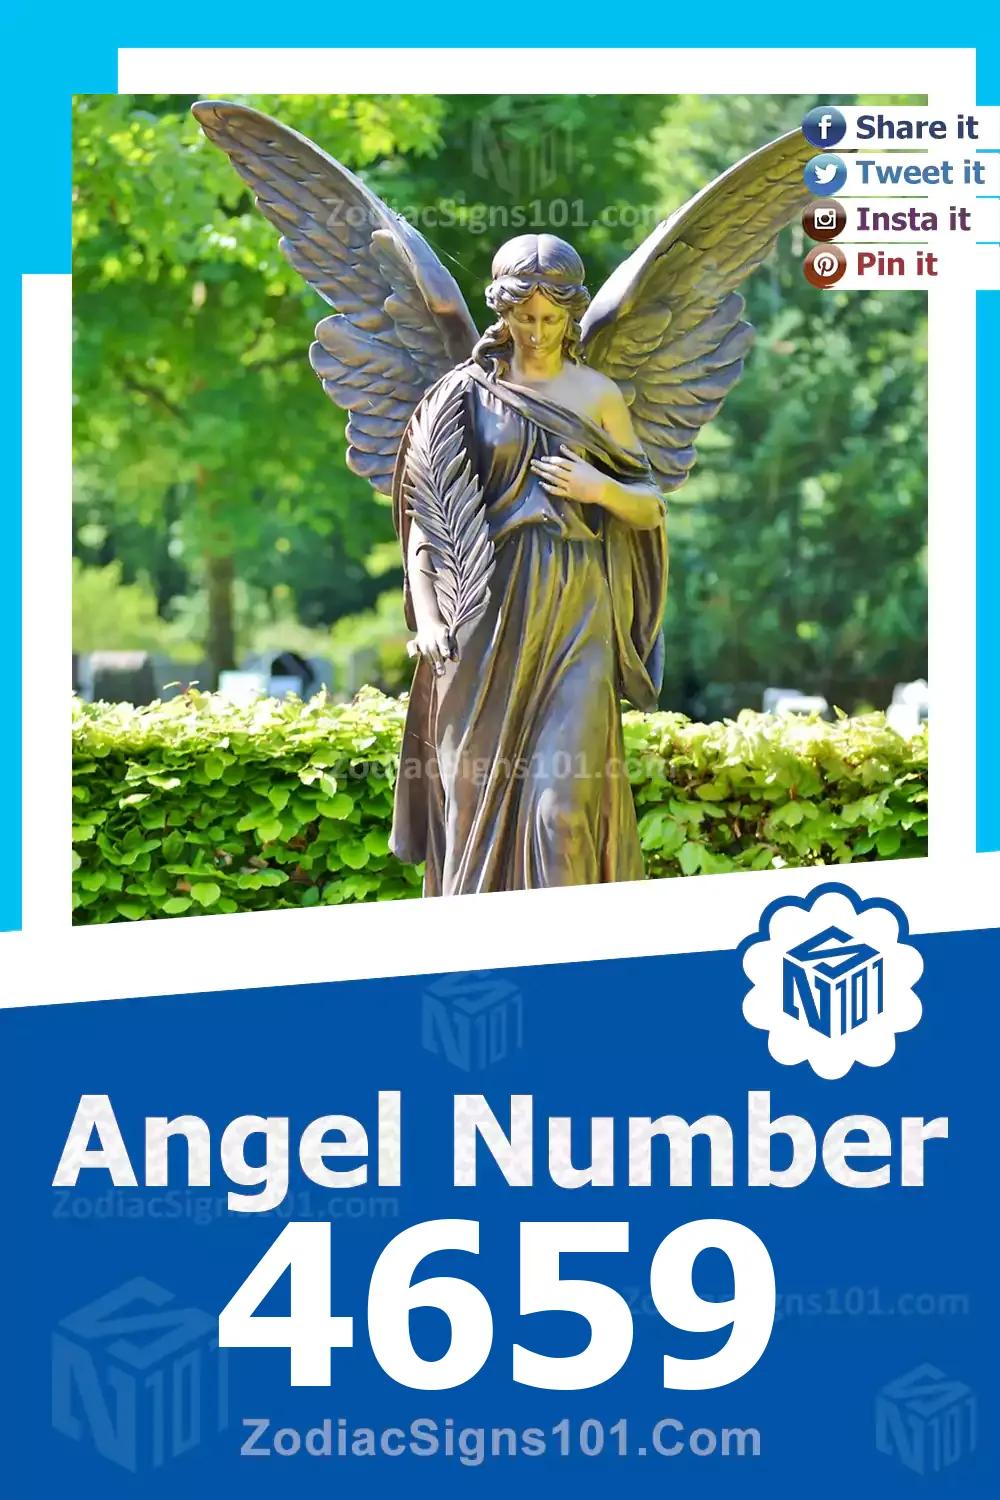 4659-Angel-Number-Meaning.jpg